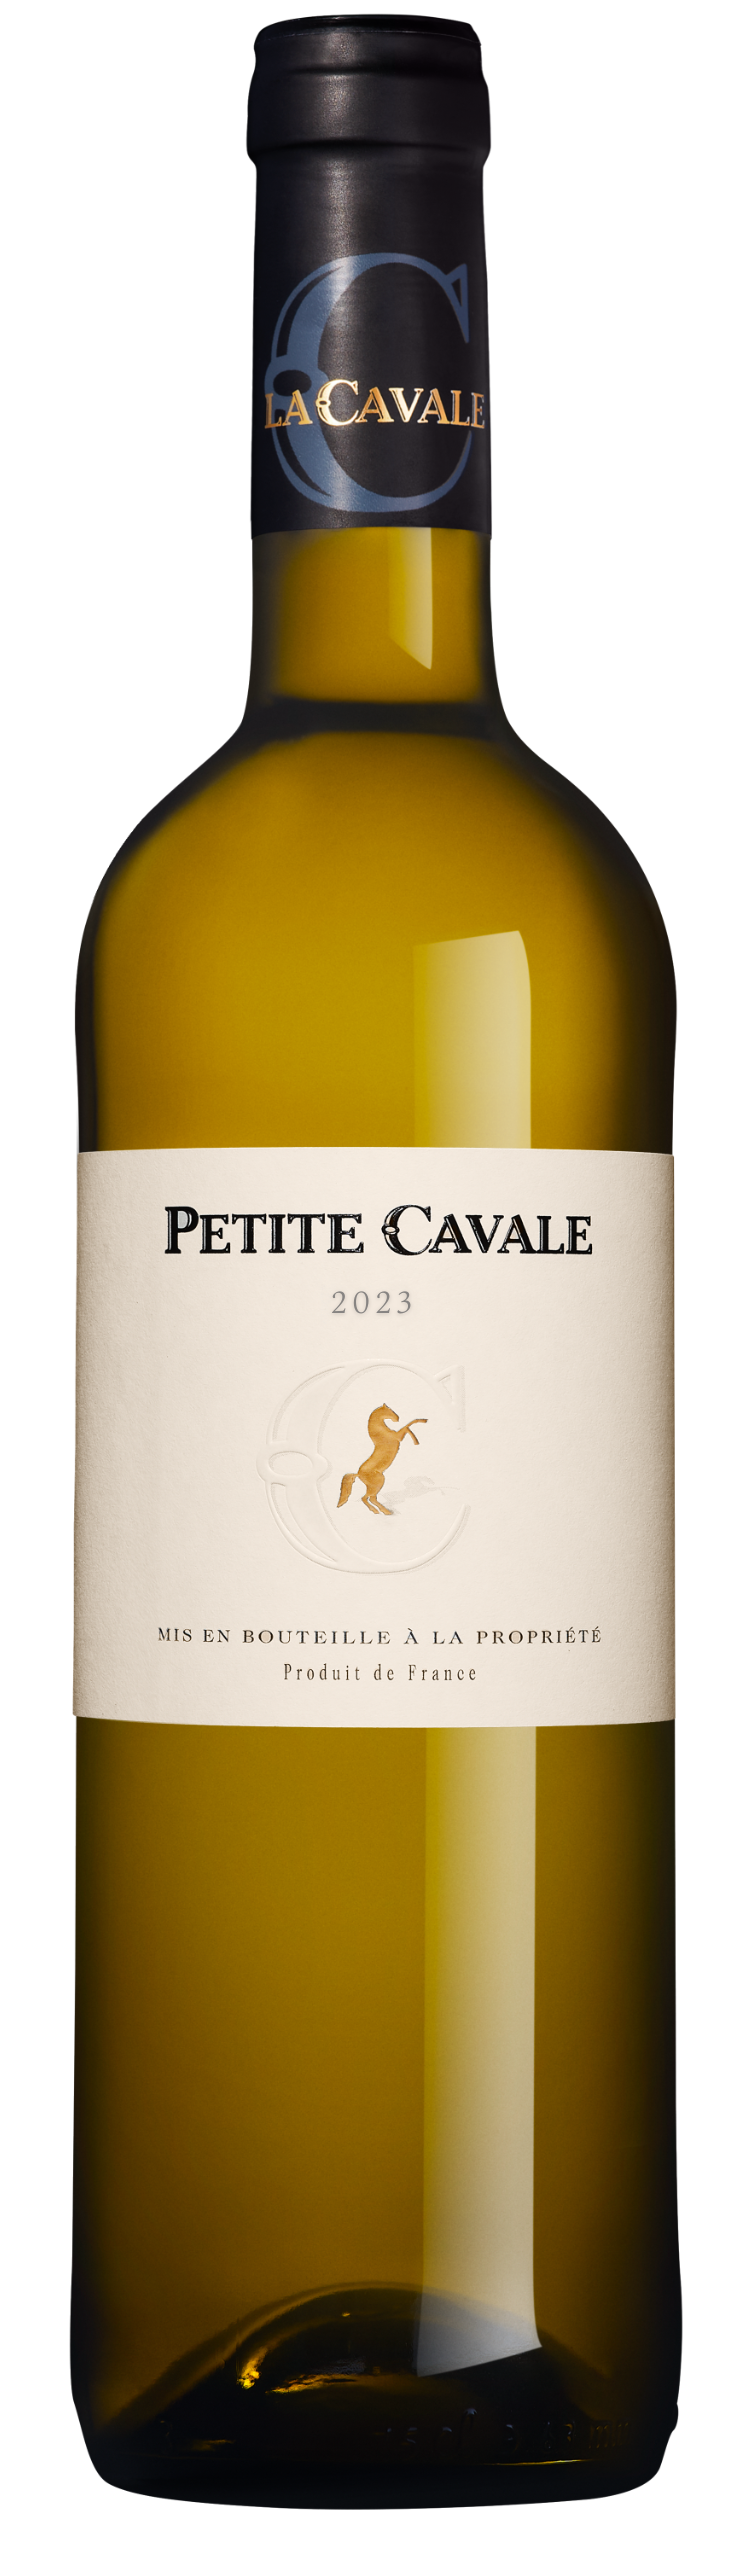 Petite Cavale blanc 2023 - Domaine La Cavale